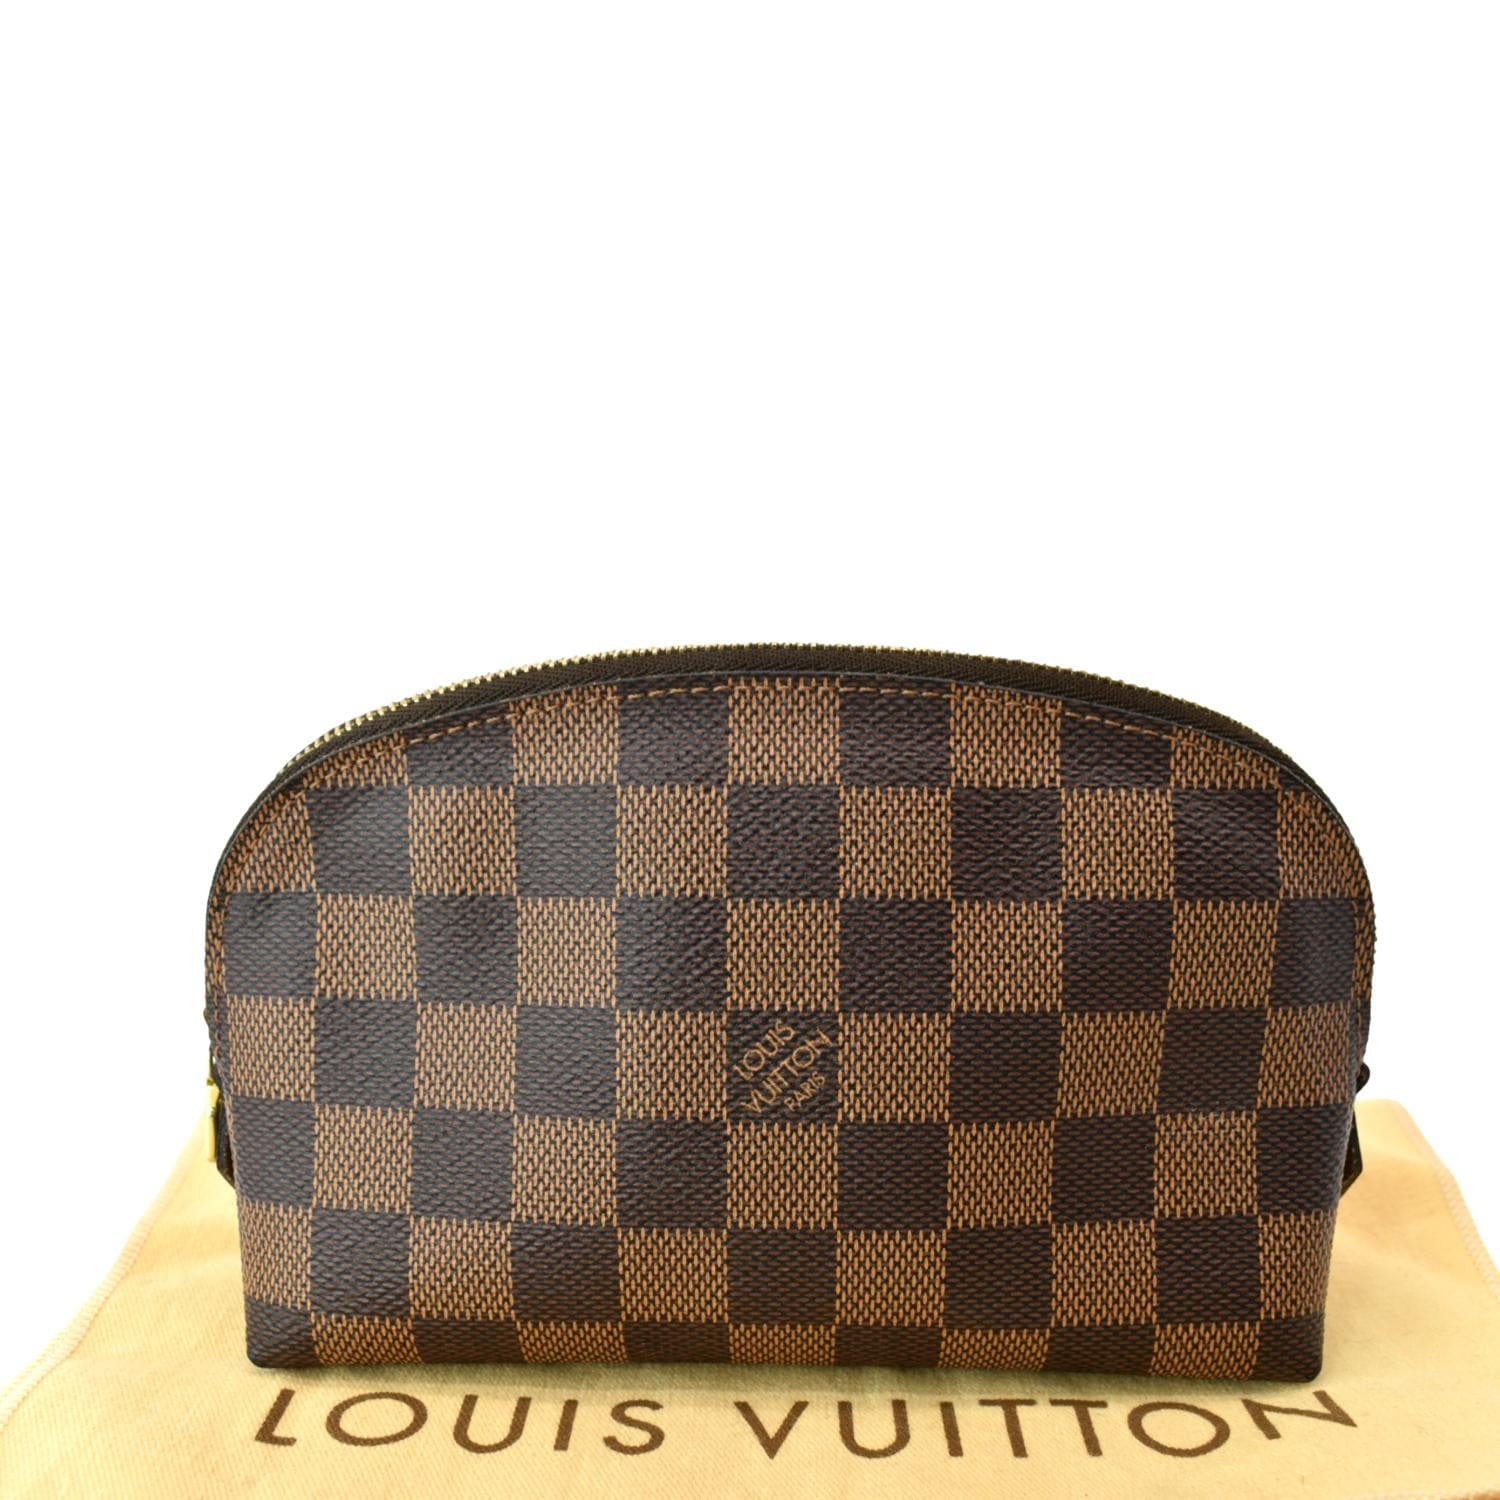 Louis Vuitton Cosmetic Pouch GM Damier Ebene